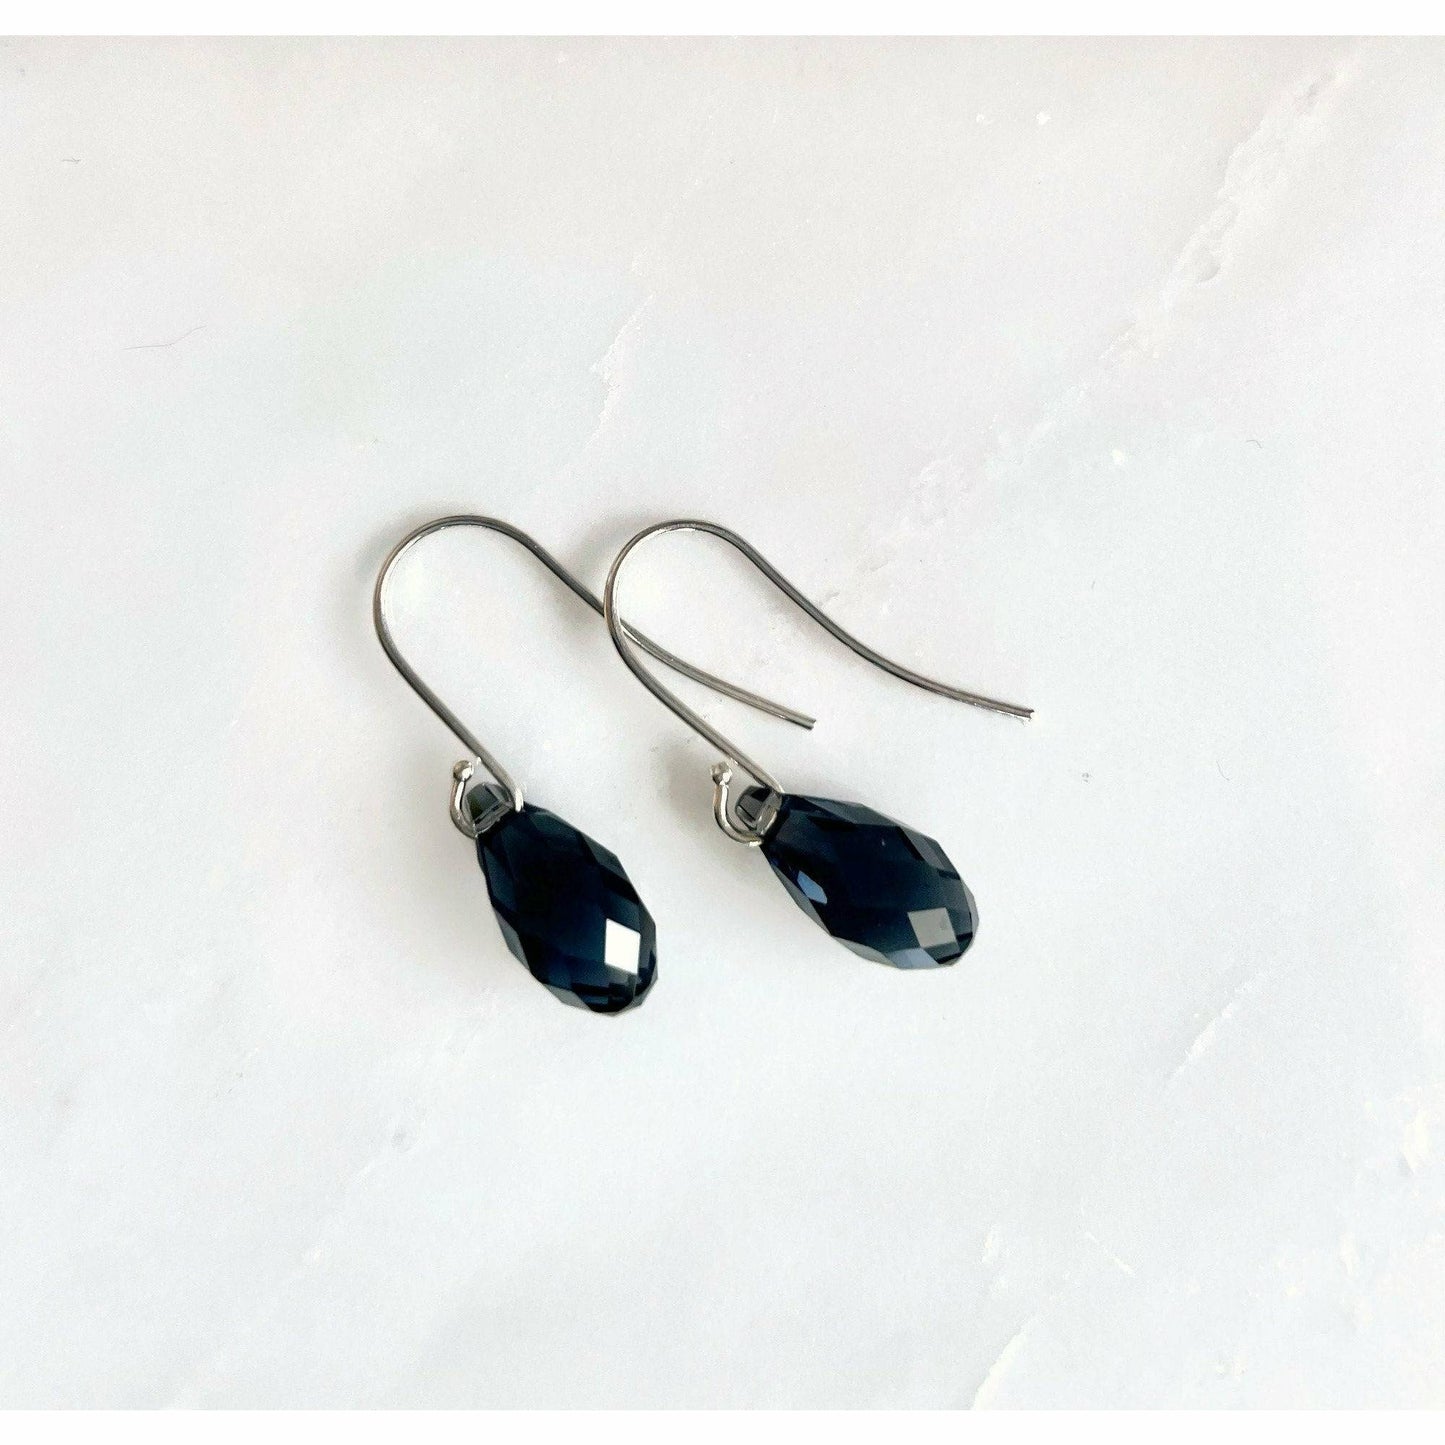 Dark silver crystal teardrop earrings